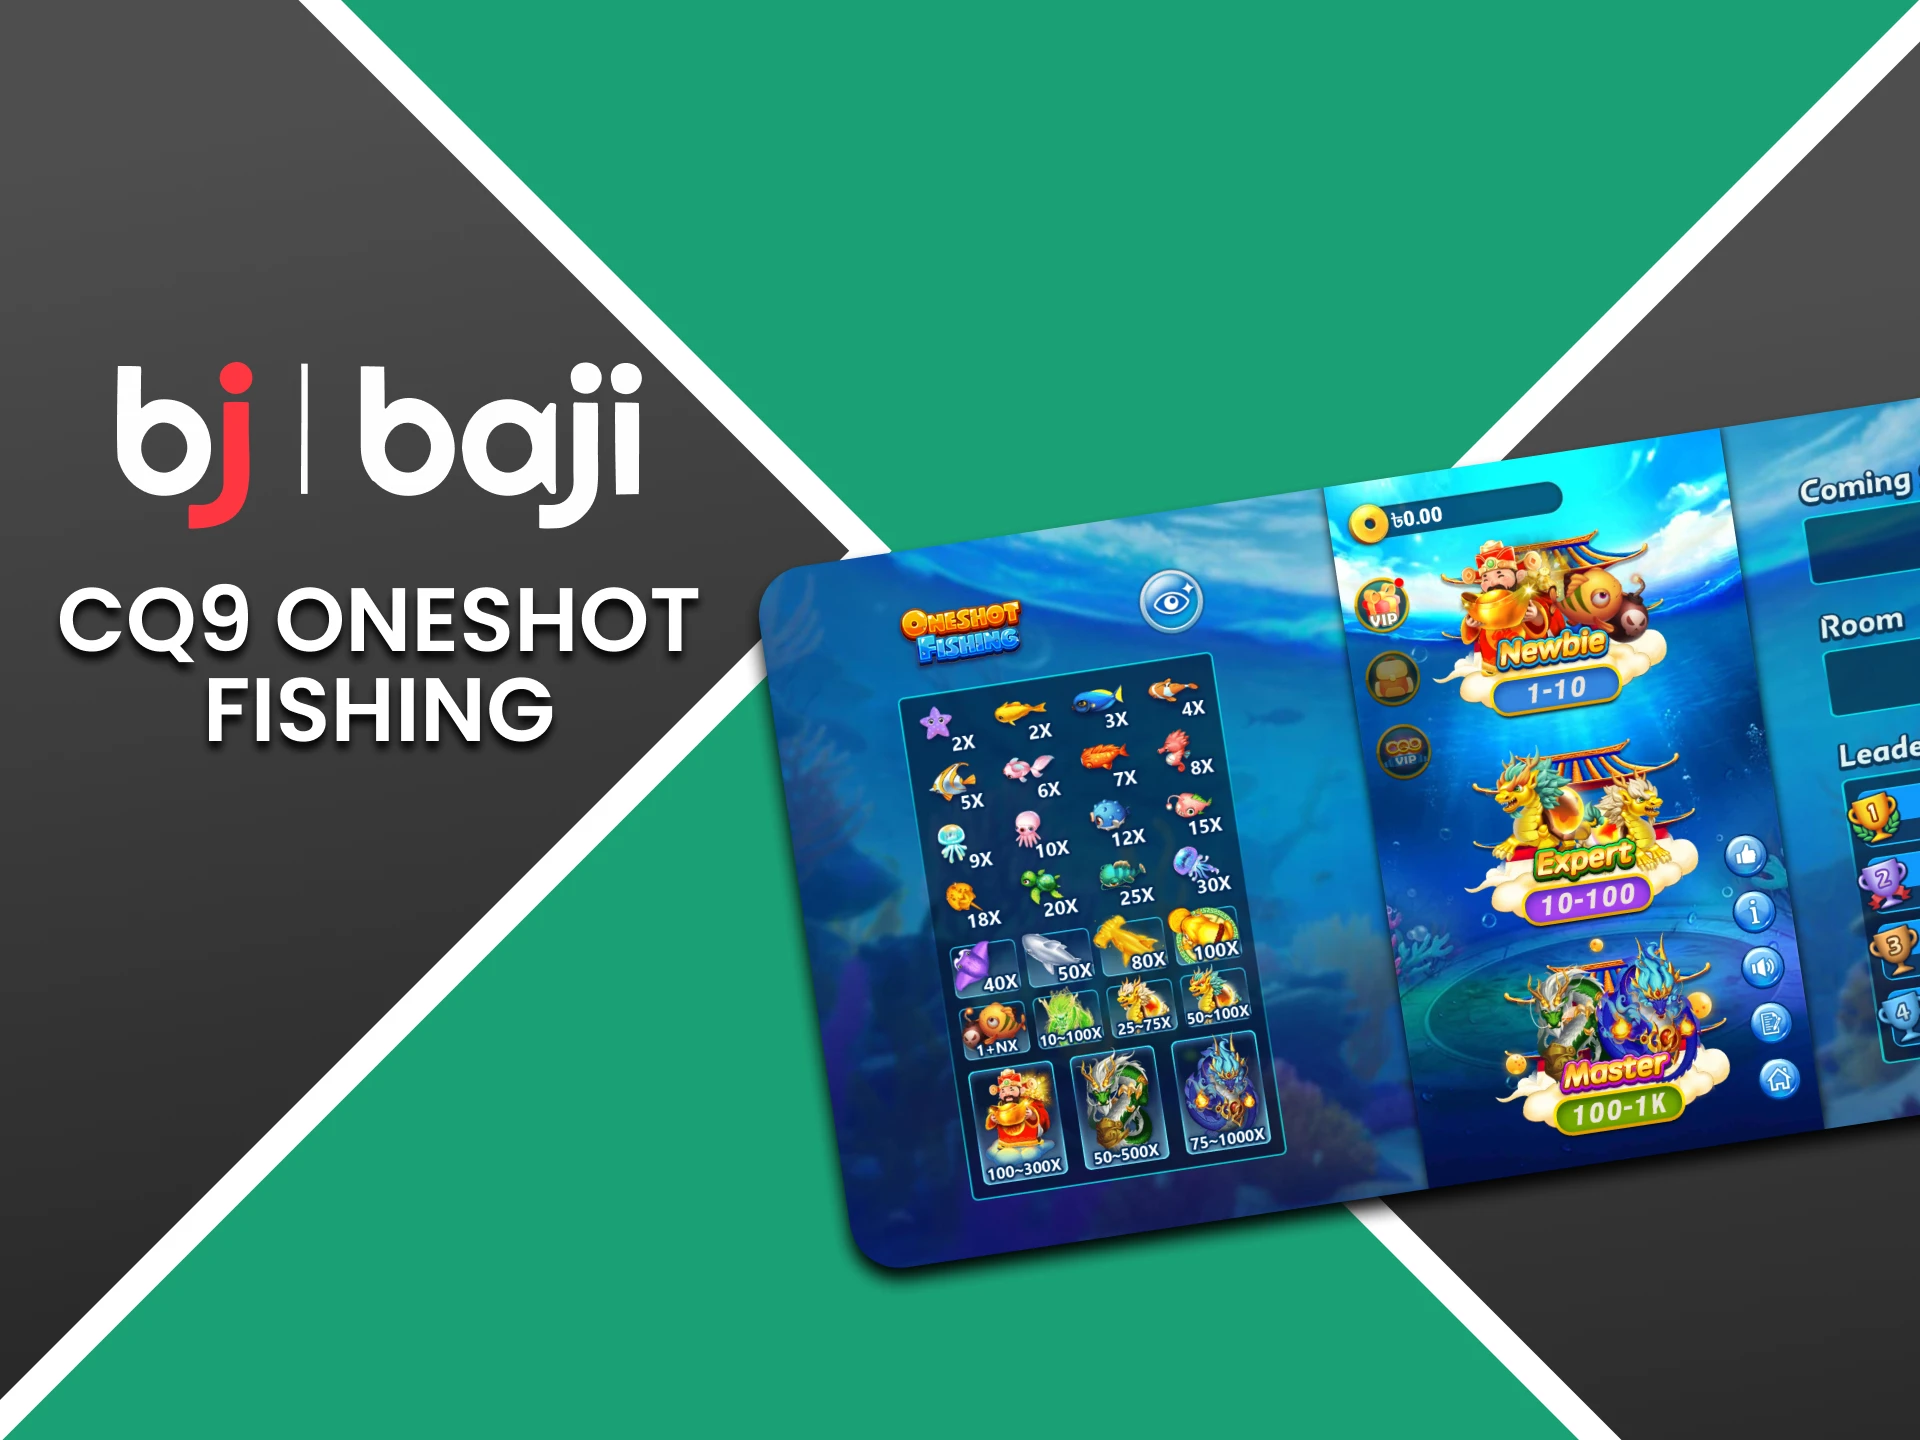 Choose Oneshot Fishing in the fishing section from Baji.